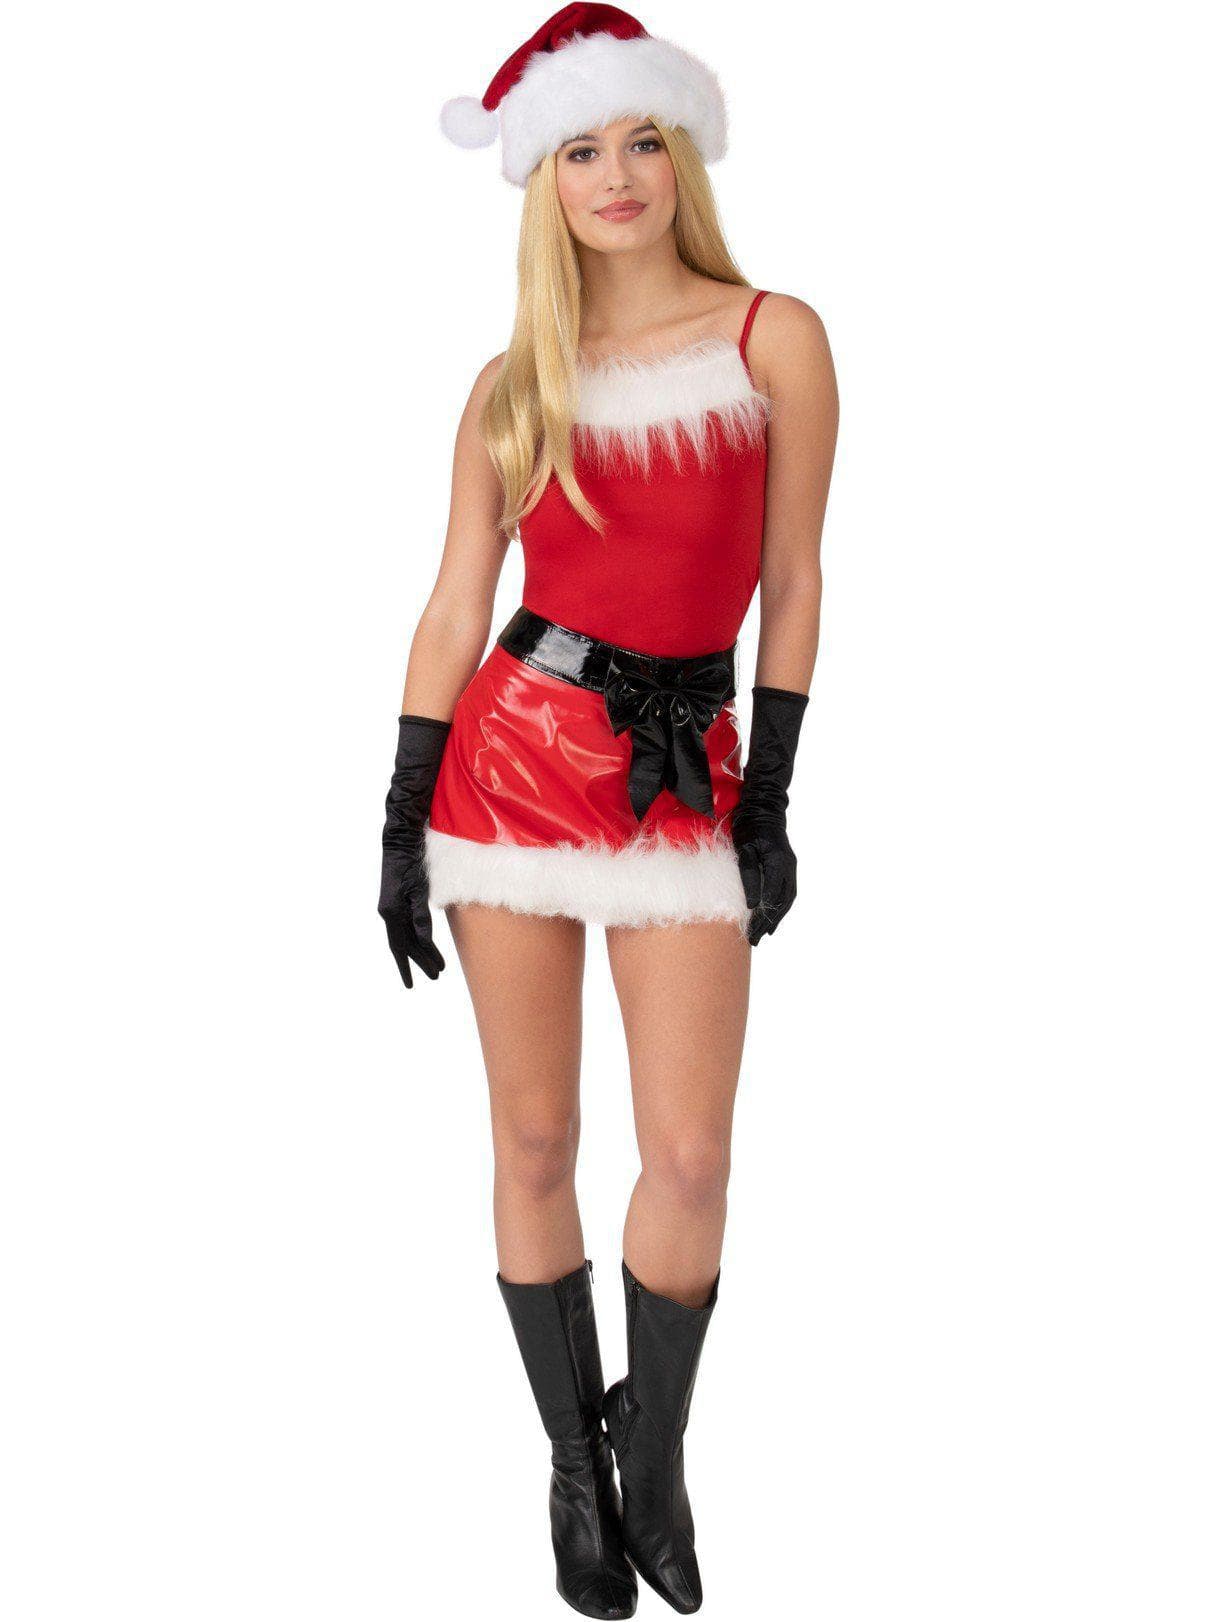 Adult Mean Girls Costume - costumes.com